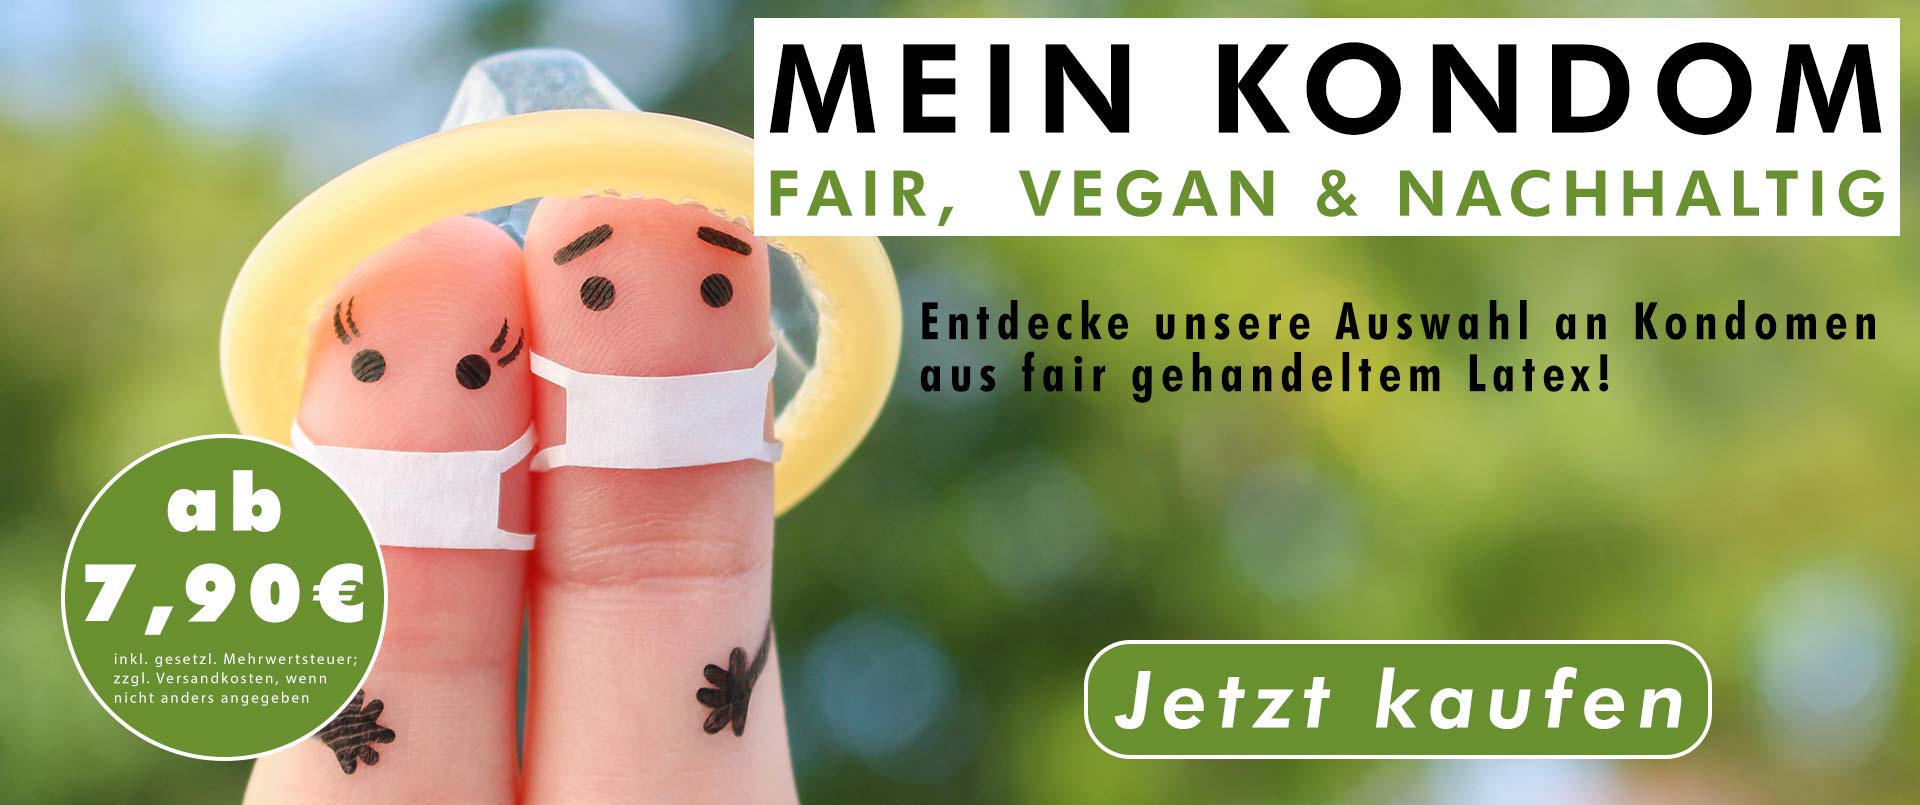 MEIN KONDOM | Fair, vegan & nachhaltig!